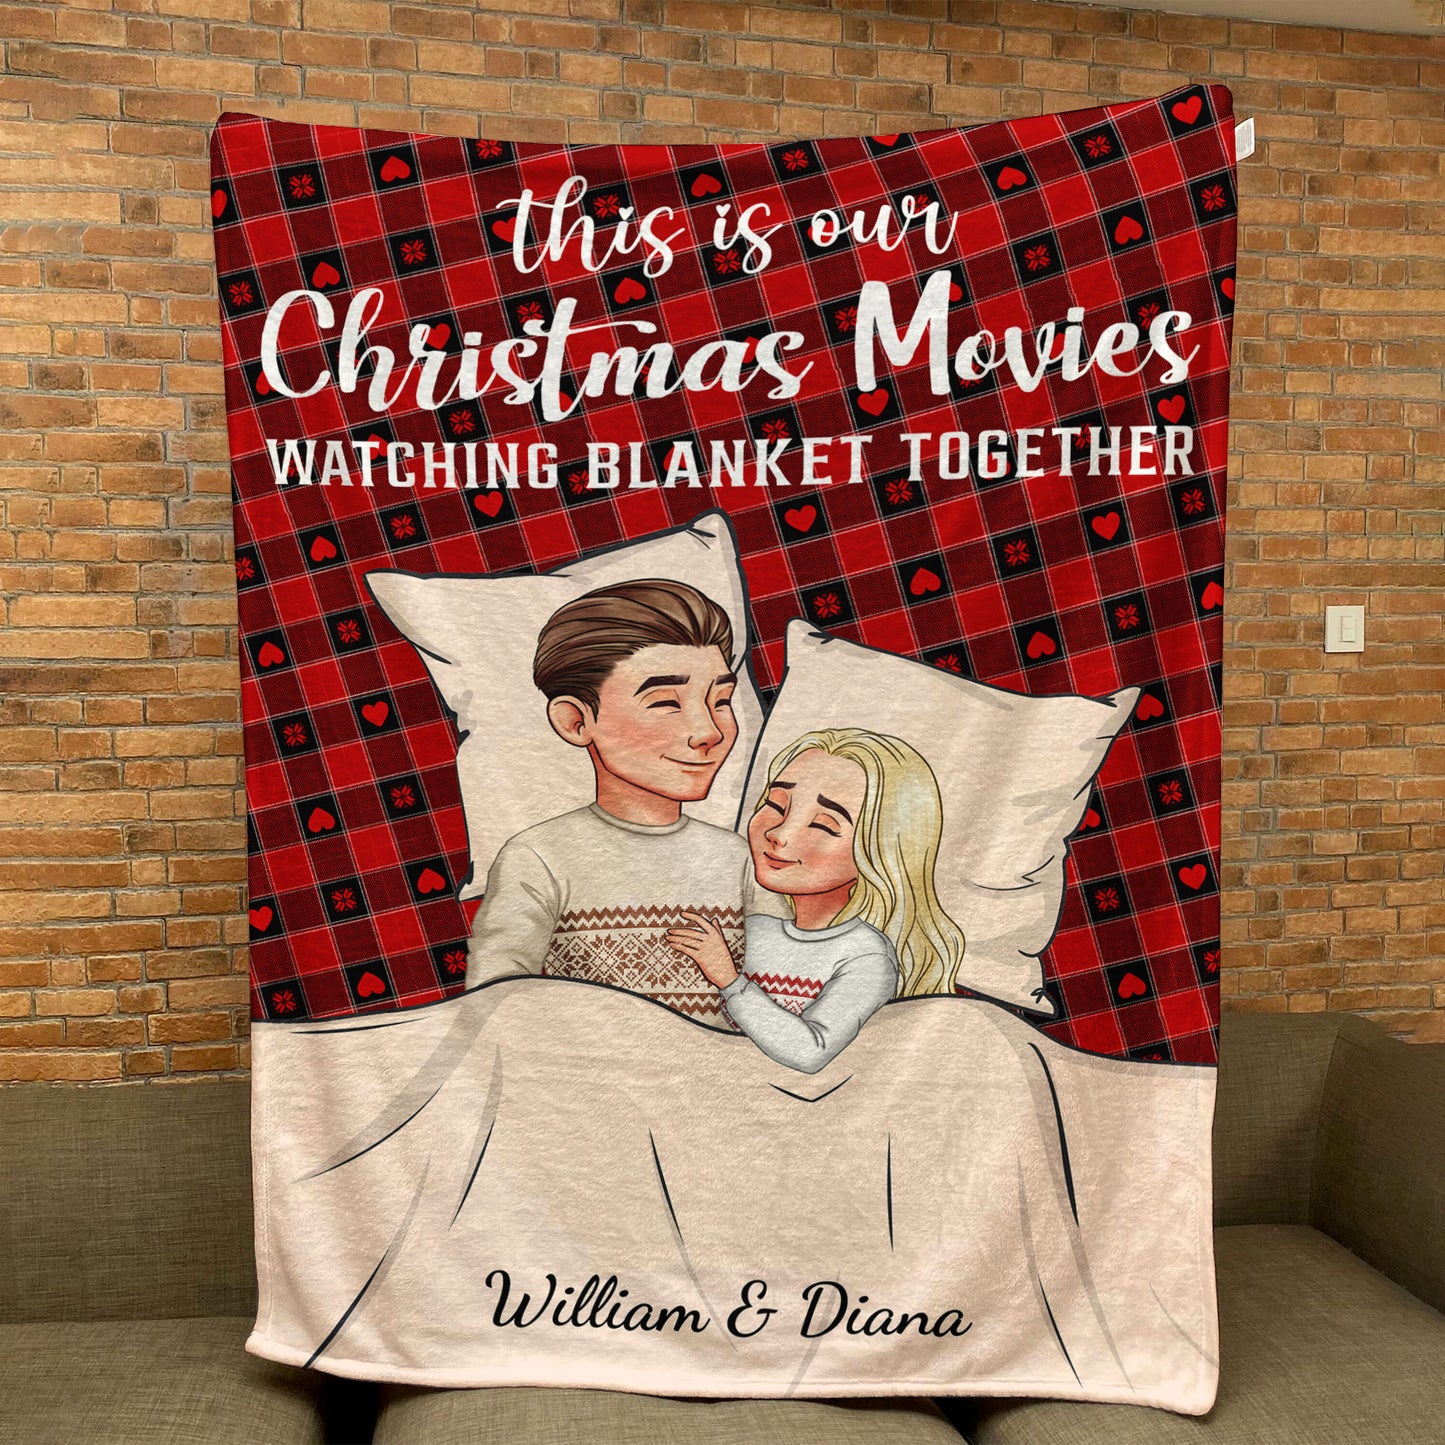 My Christmas Movie Watching Pillow - Personalized Pillow (Insert Inclu –  Macorner